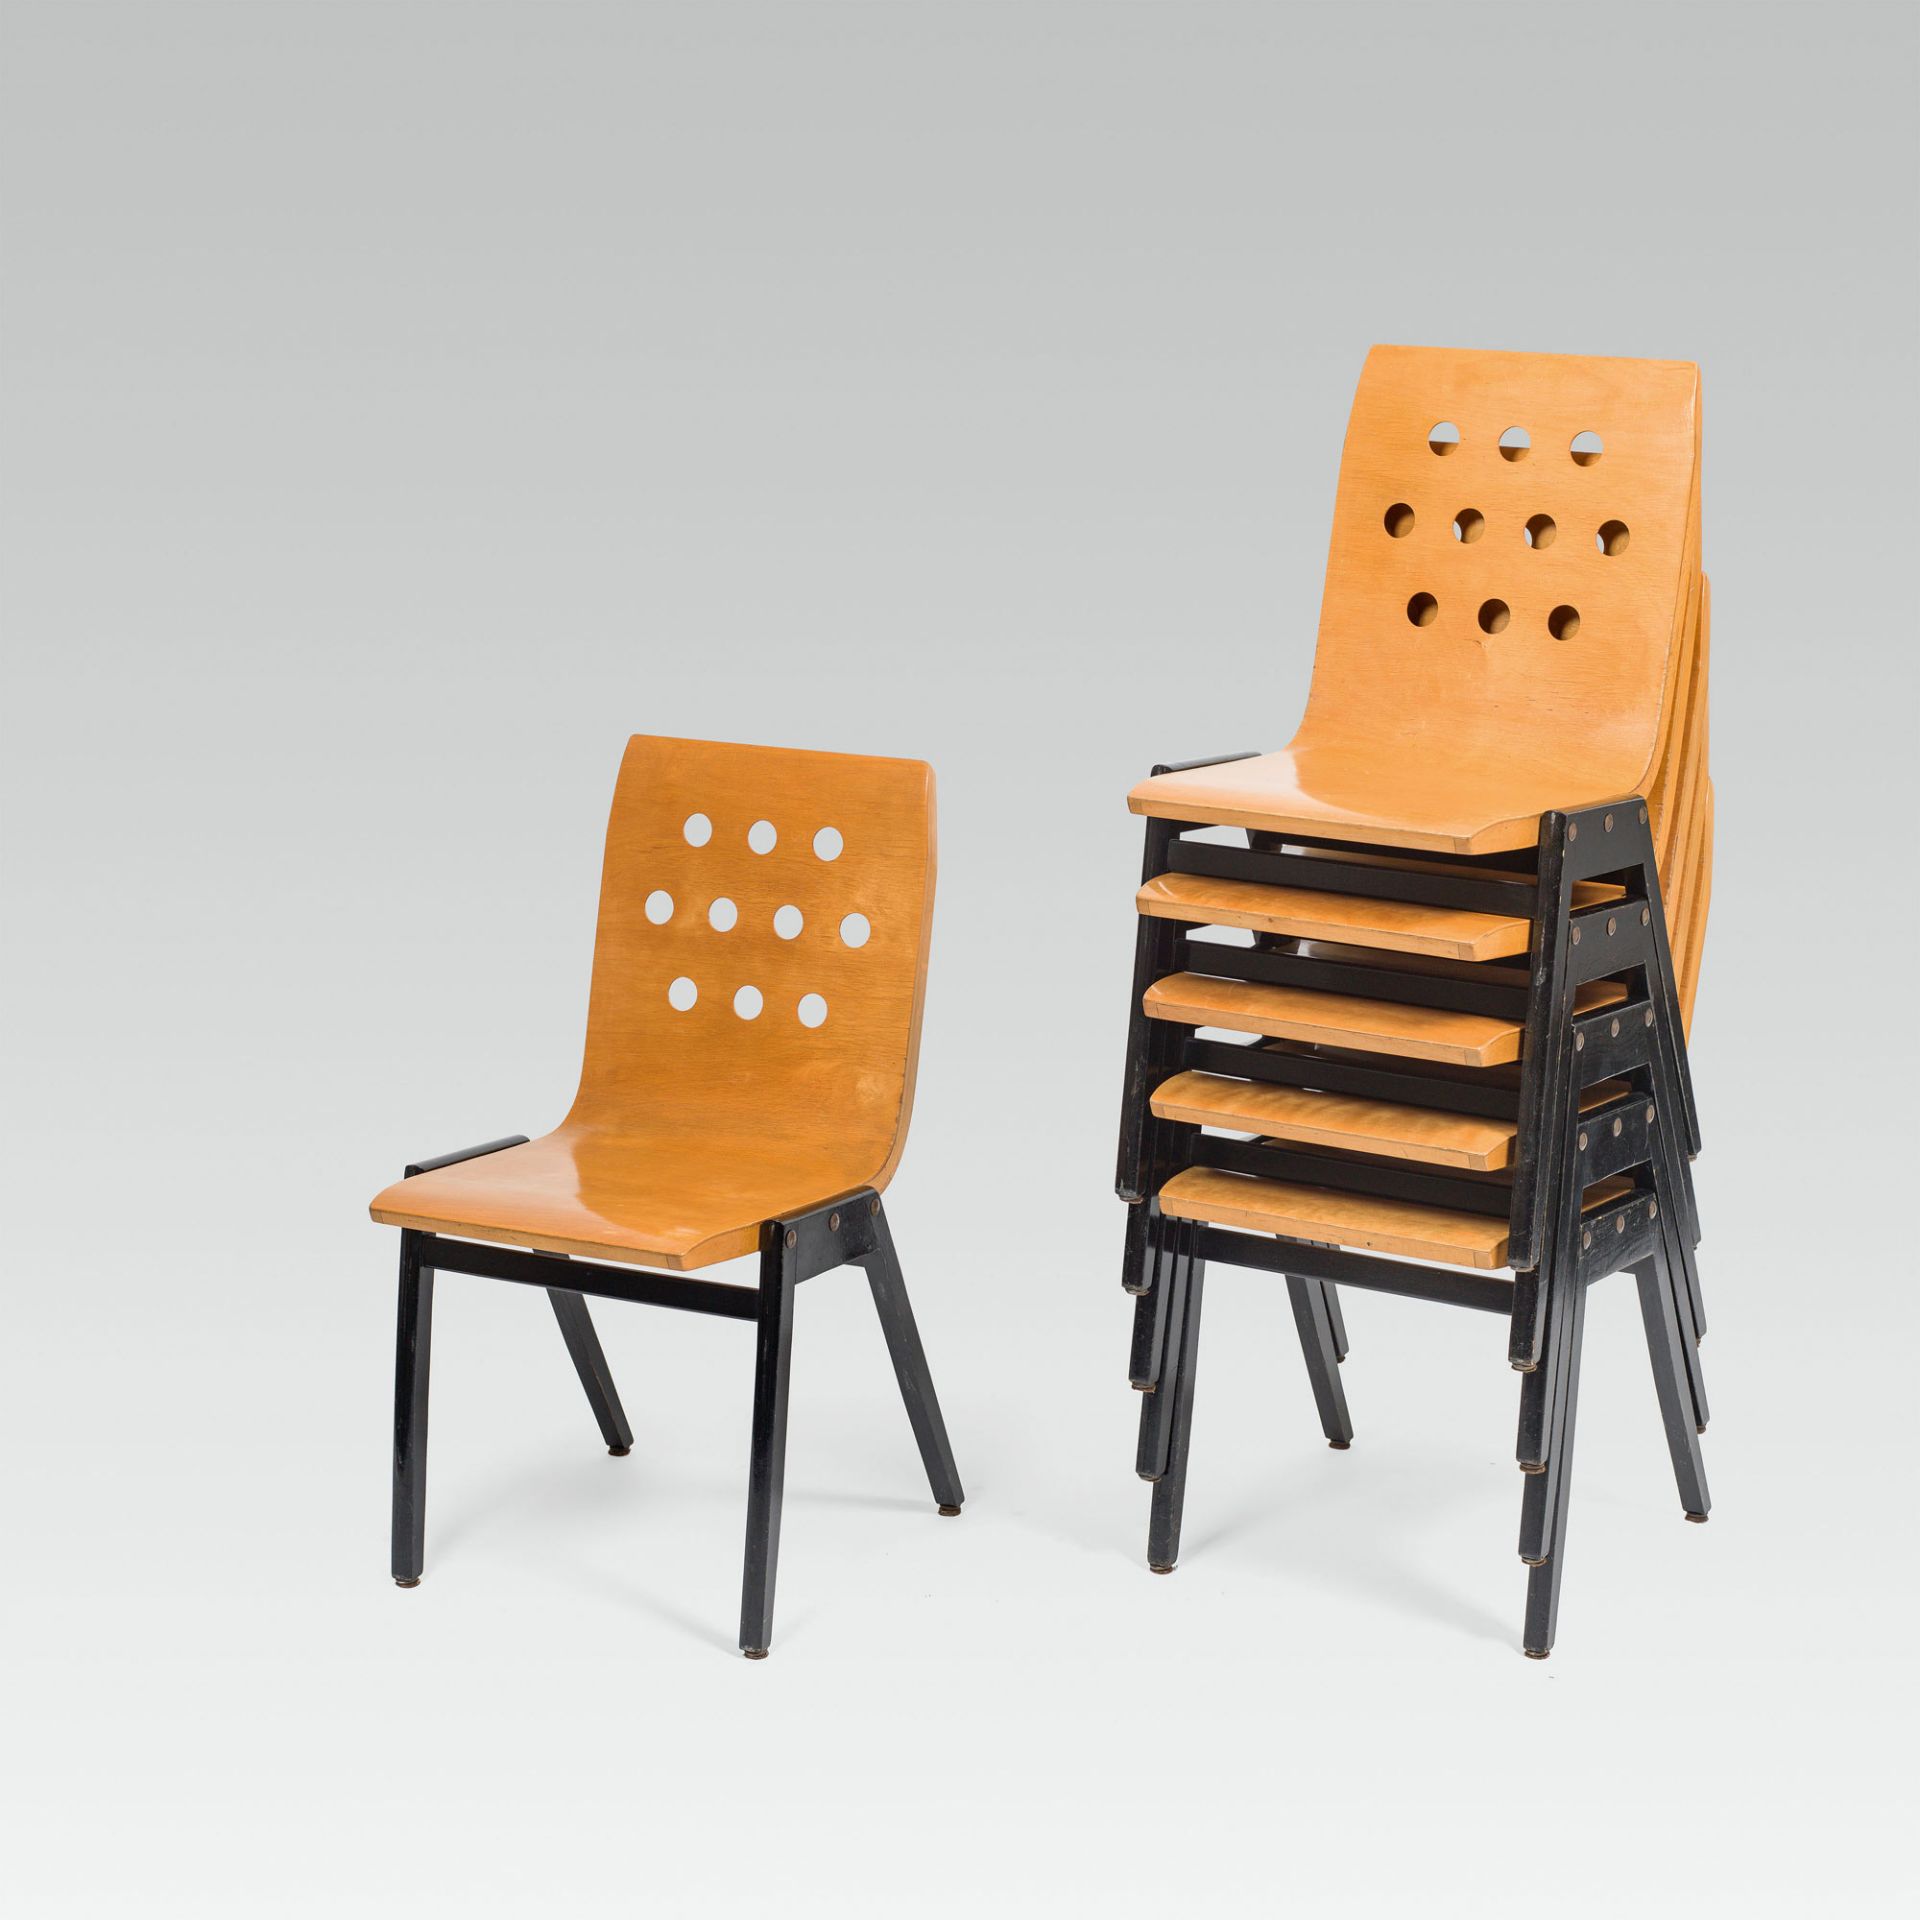 Roland Rainer6 Stacking chairs no. 3/4/3beechwood, colourless varnish, chairlegs varnished blackh.